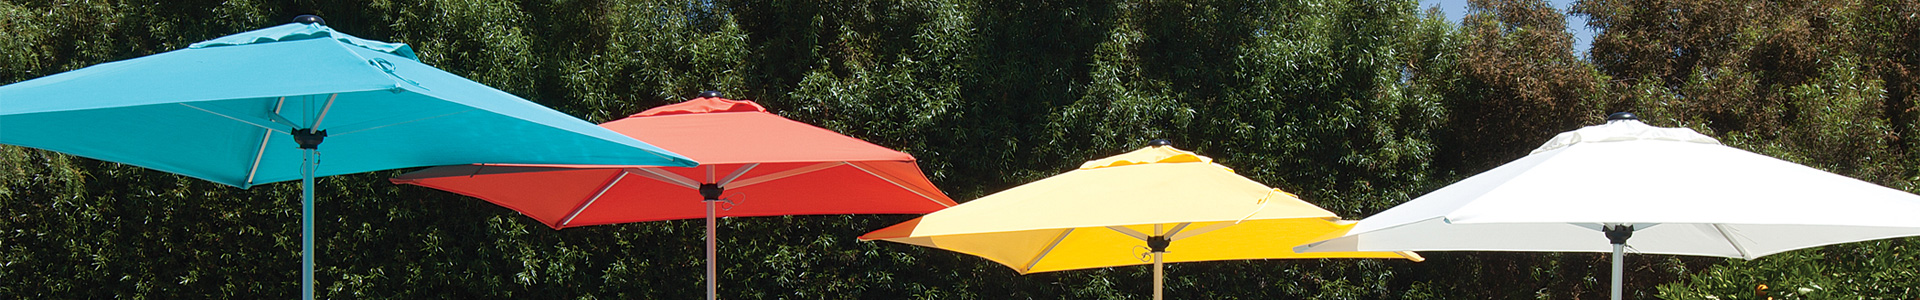 Patio Umbrellas